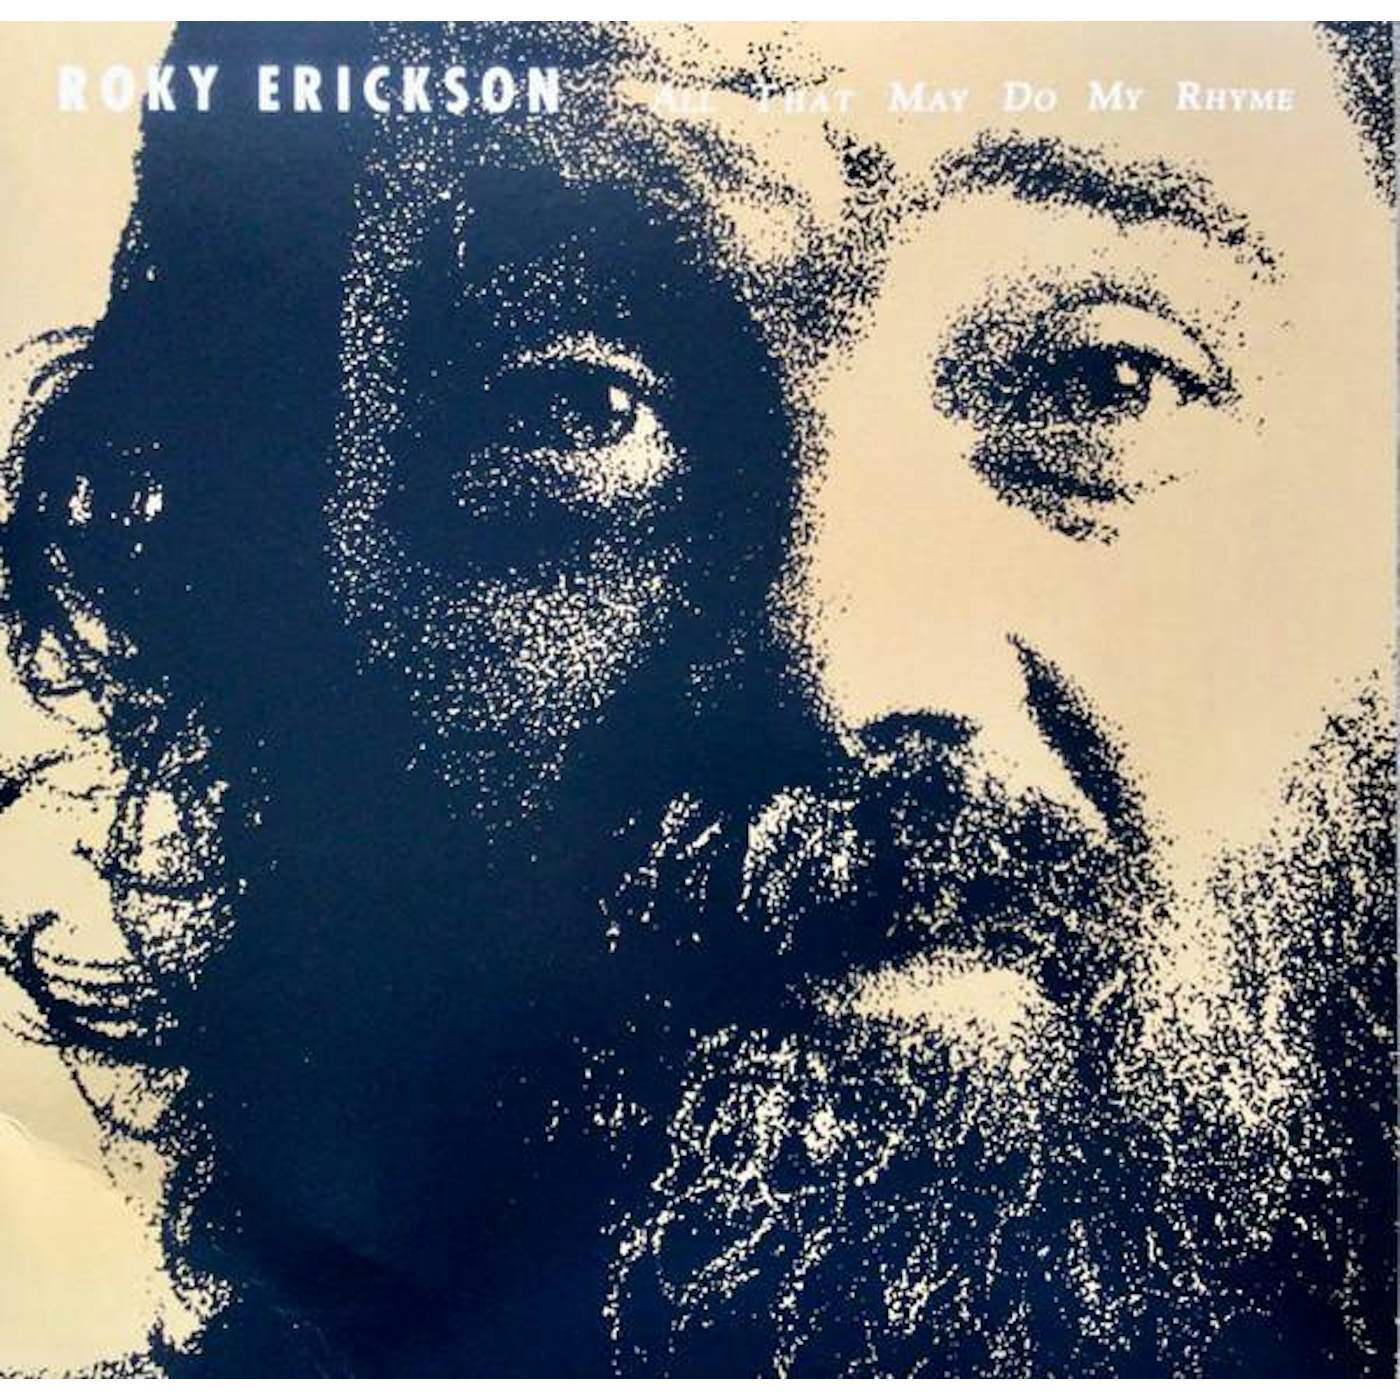 Roky Erickson ALL THAT MAY DO MY RHYME (WHITE VINYL) Vinyl Record